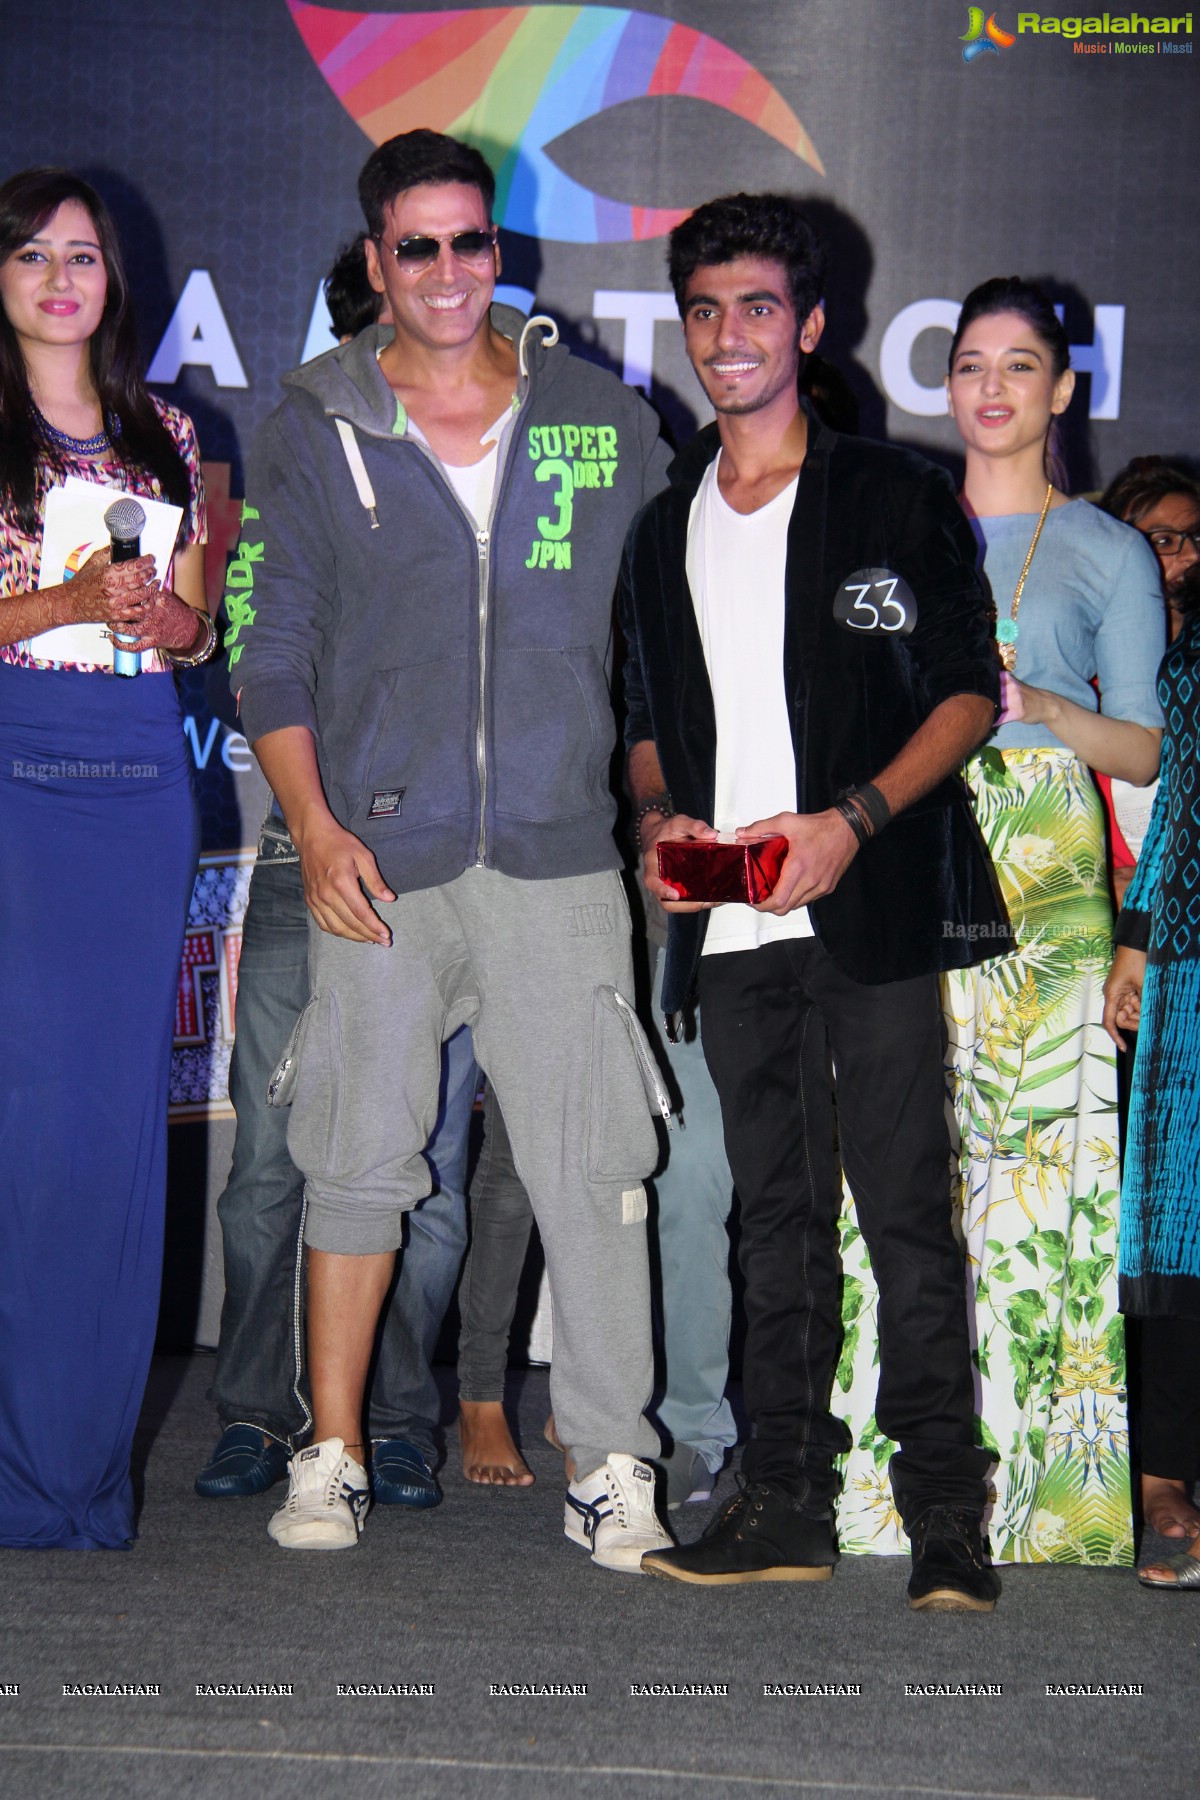 Hamstech Freshers Ball 2014 with Akshay Kumar and Tamannaah